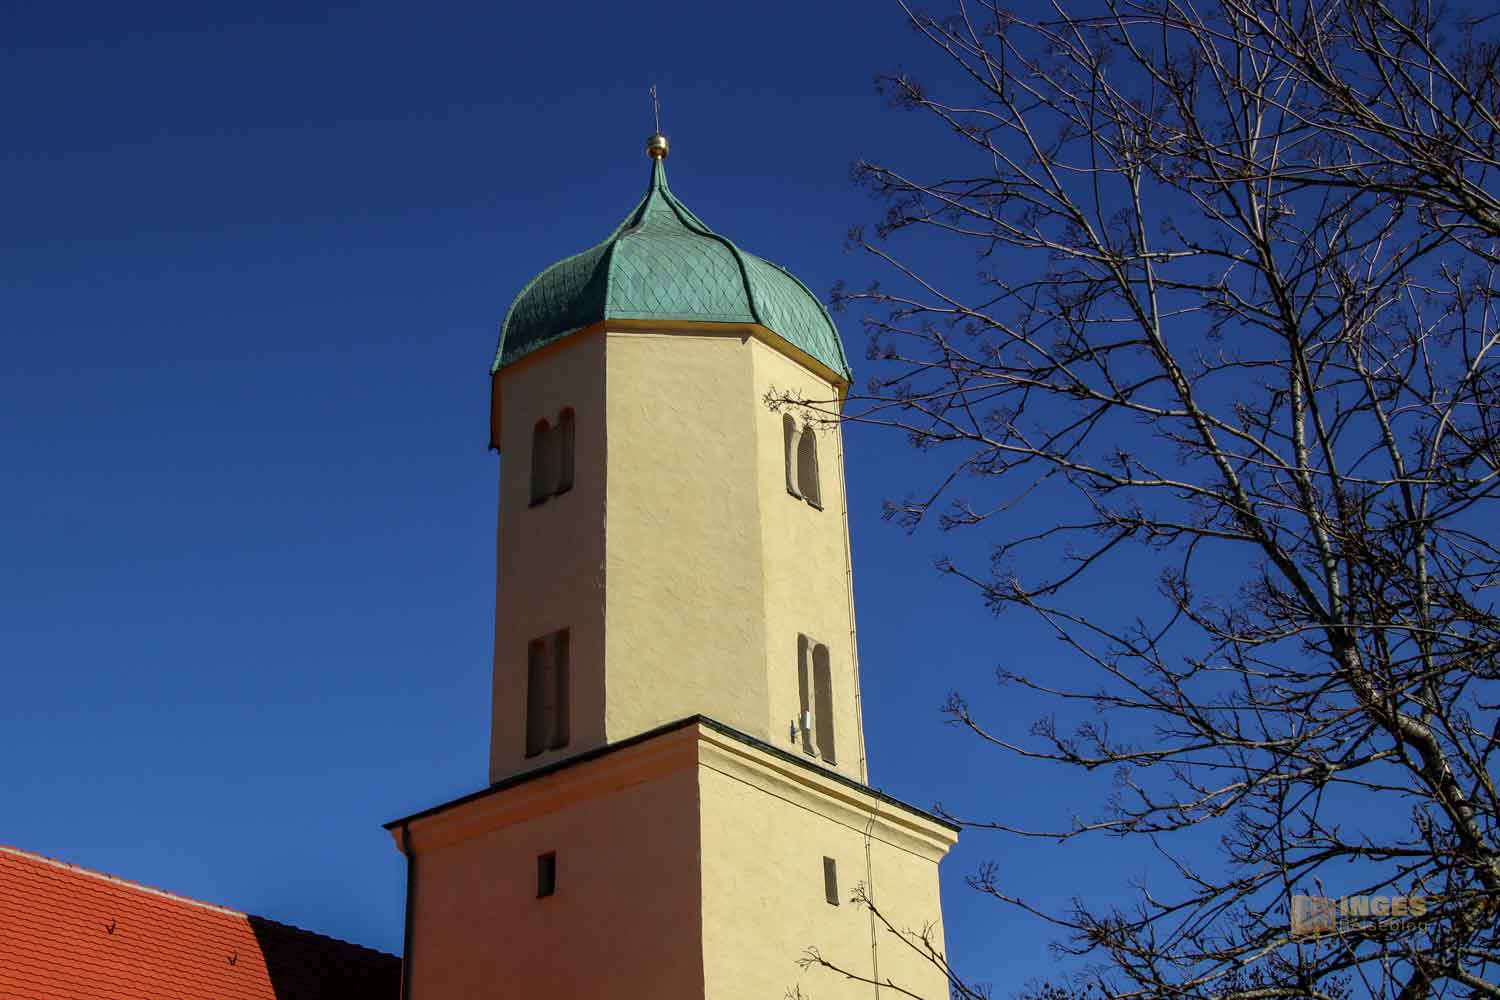 evang. Kirche Lauterburg 0356